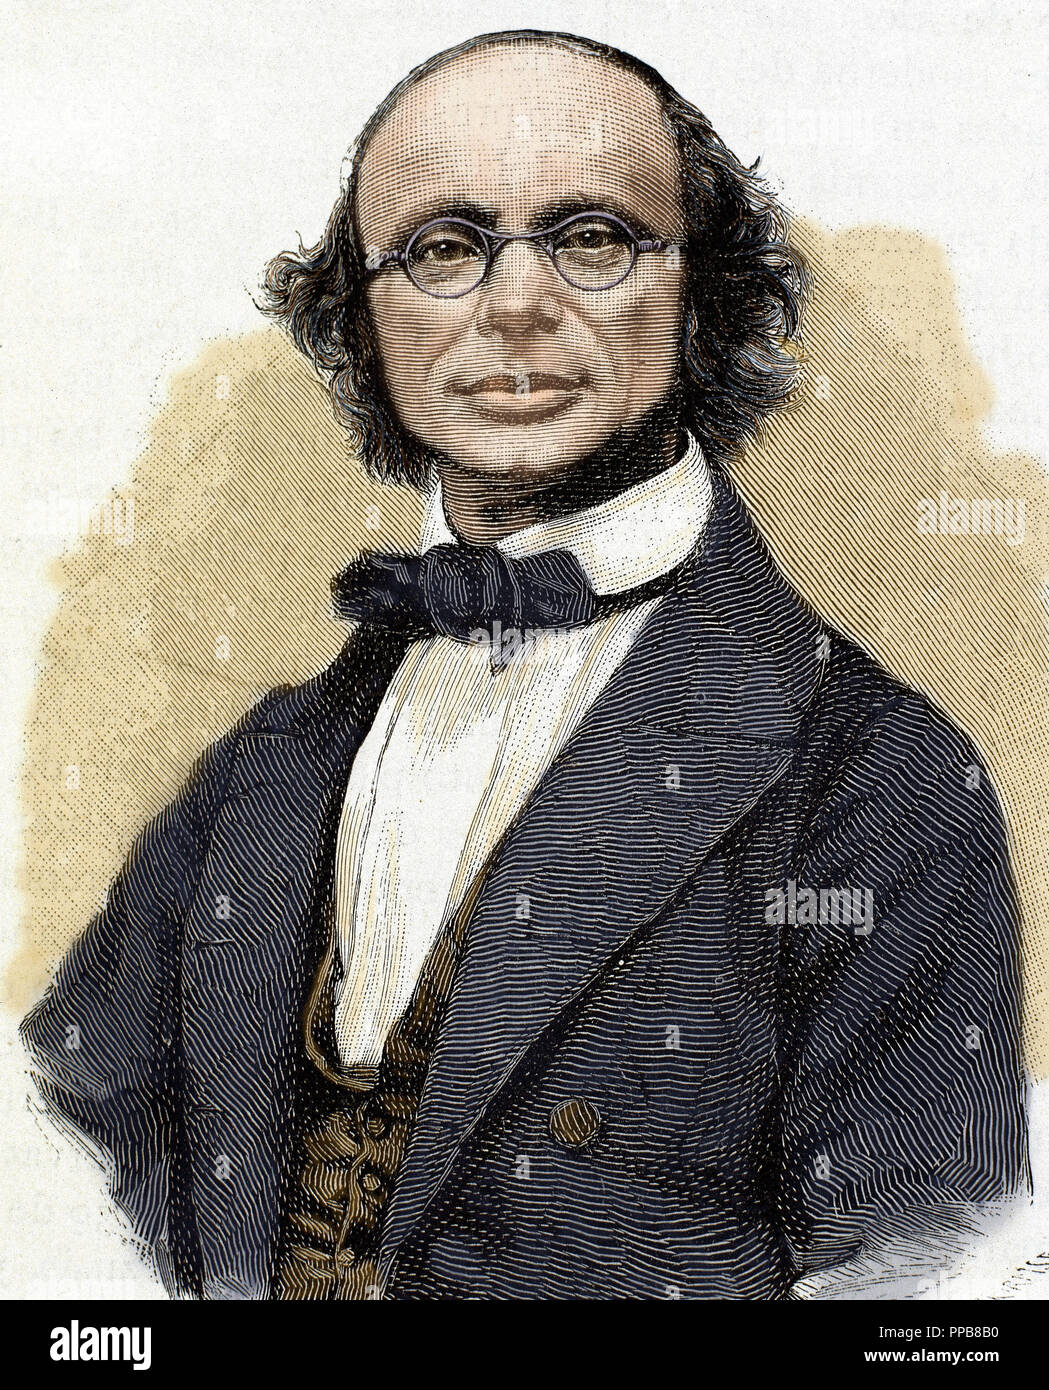 Weber, Wilhelm Eduard (Wittenberg, 1804, Gottingen, 1891). German physicist. Nineteenth-century engraving. Stock Photo